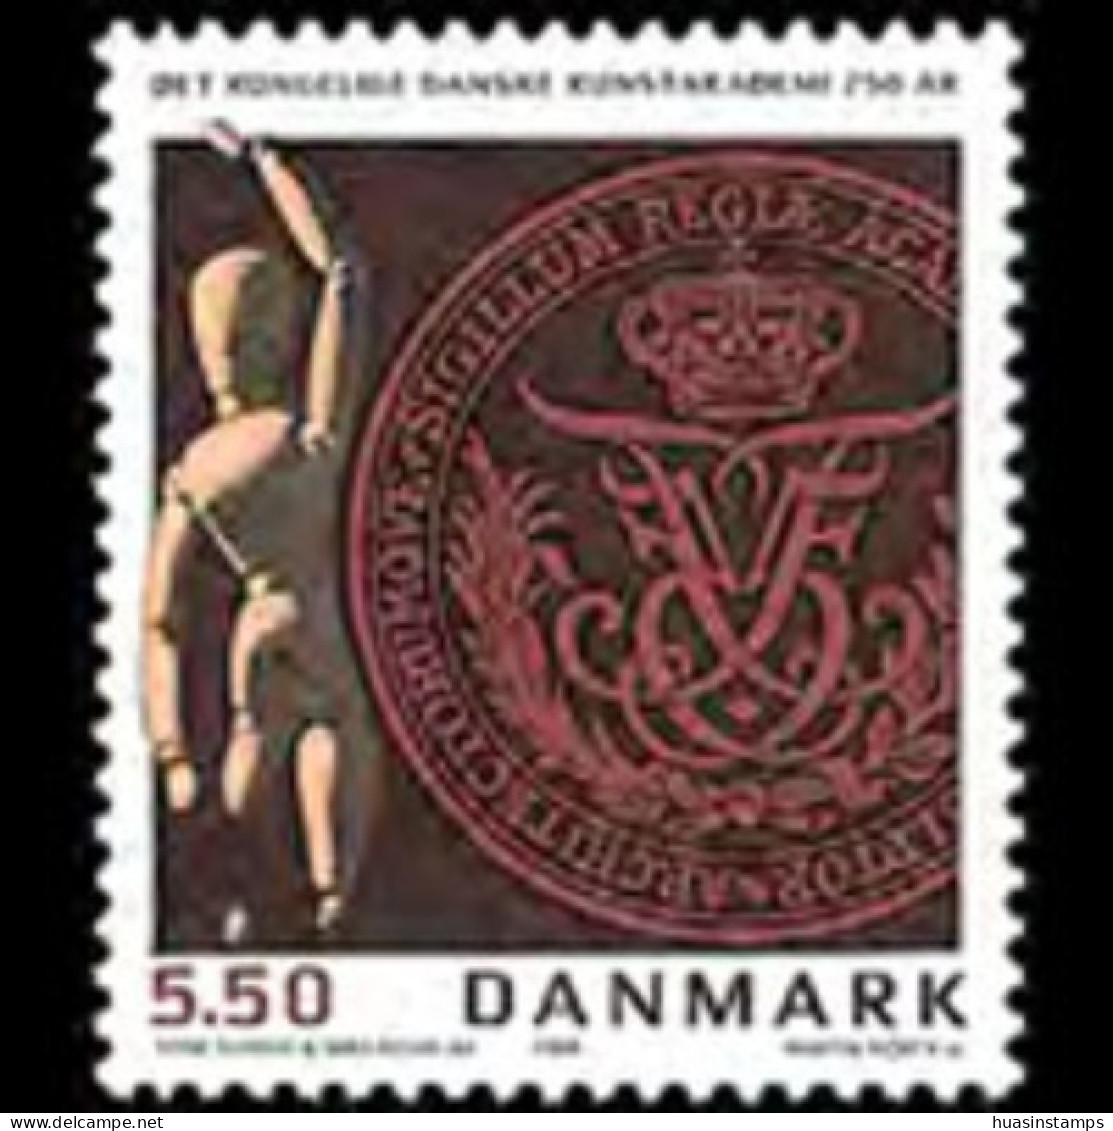 DENMARK 2004 - Scott# 1272 Art Academy Set Of 1 MNH - Unused Stamps